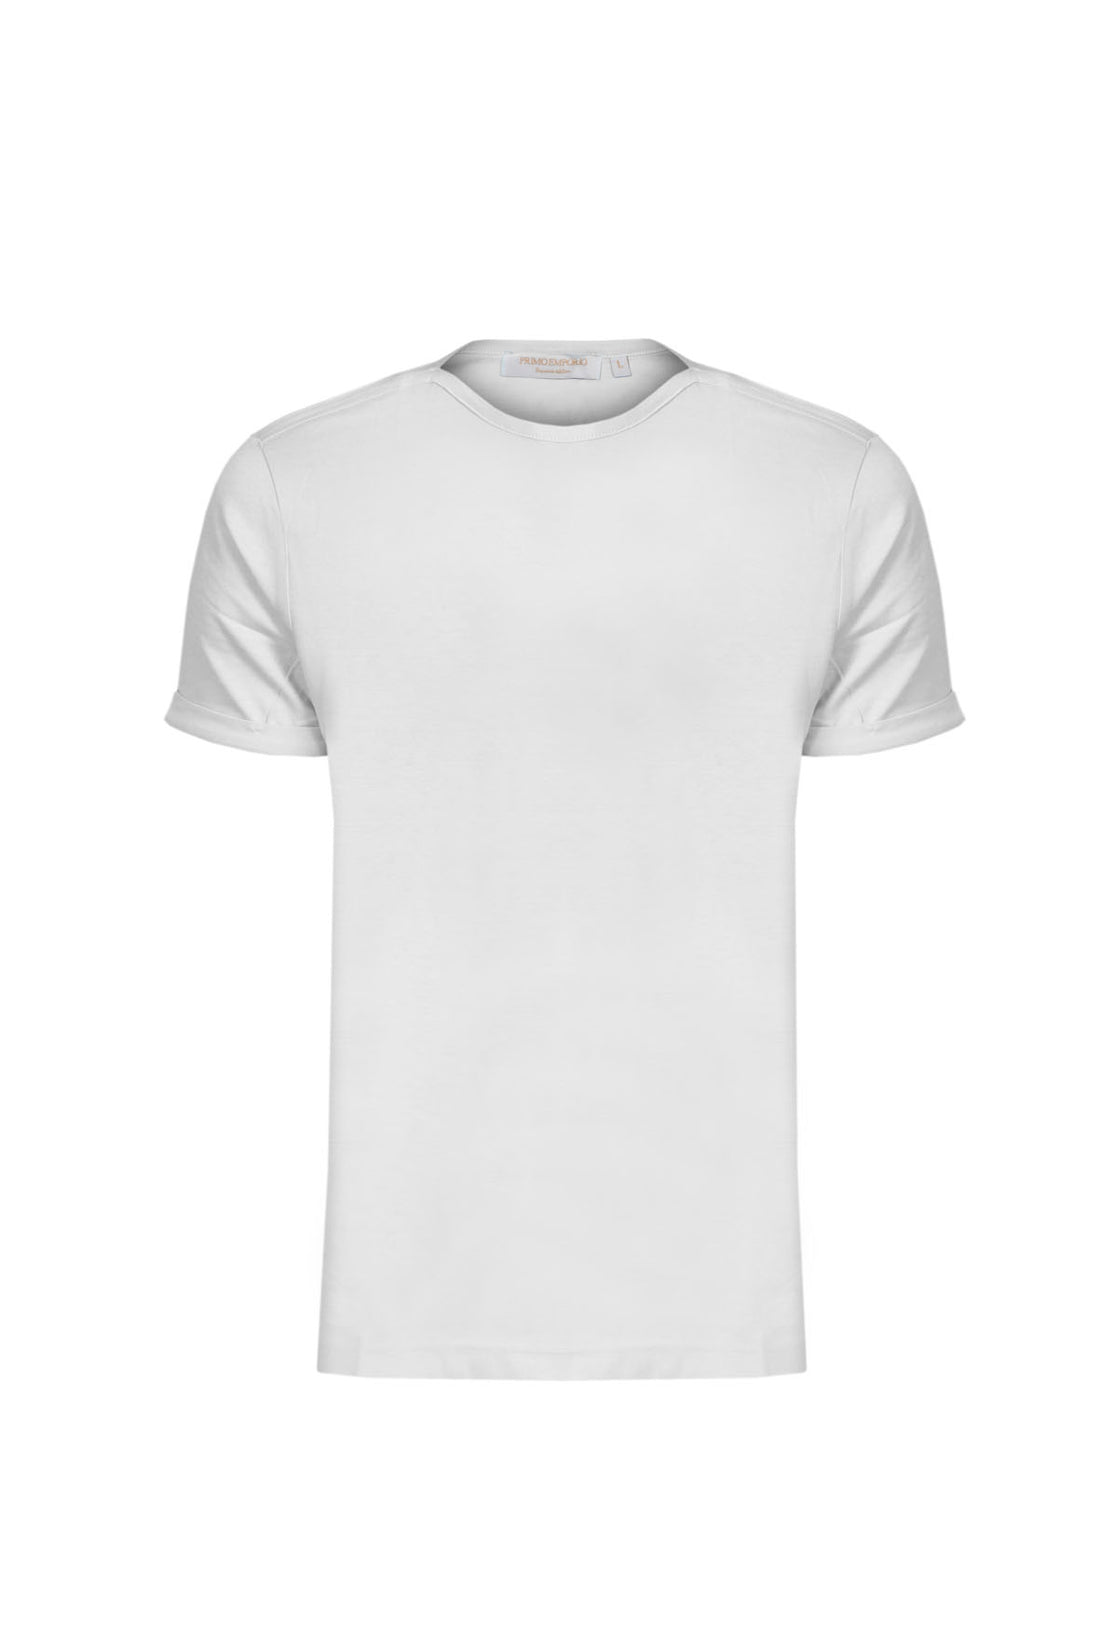 Boat Neck Half Sleeve T-Shirt - White